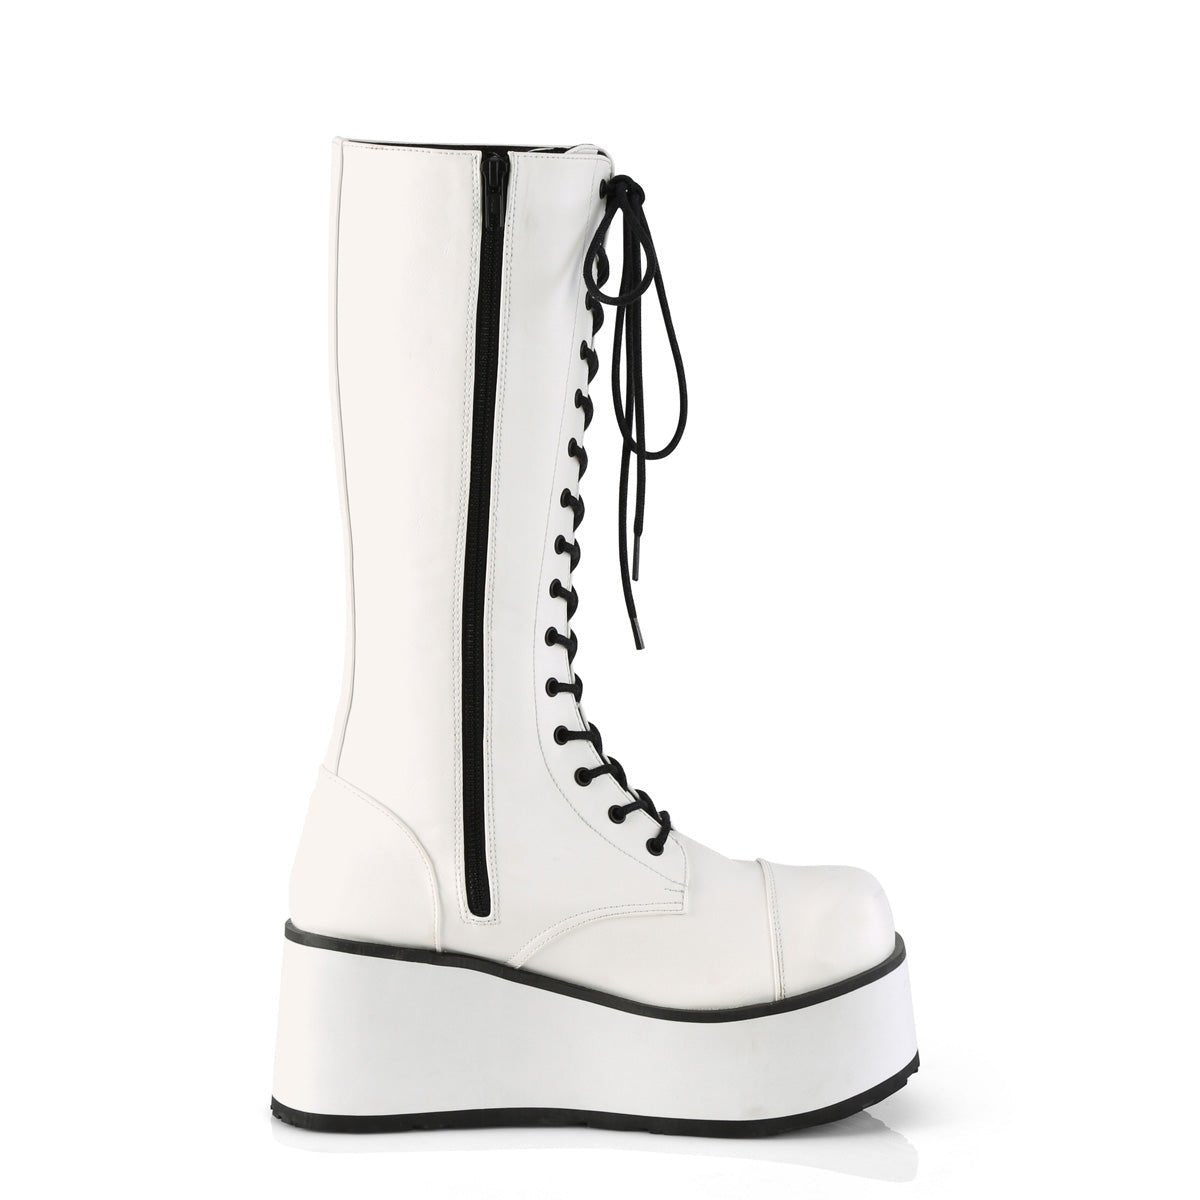 Too Fast | Demonia Trashville 502 | White Vegan Leather Unisex Platform Boots